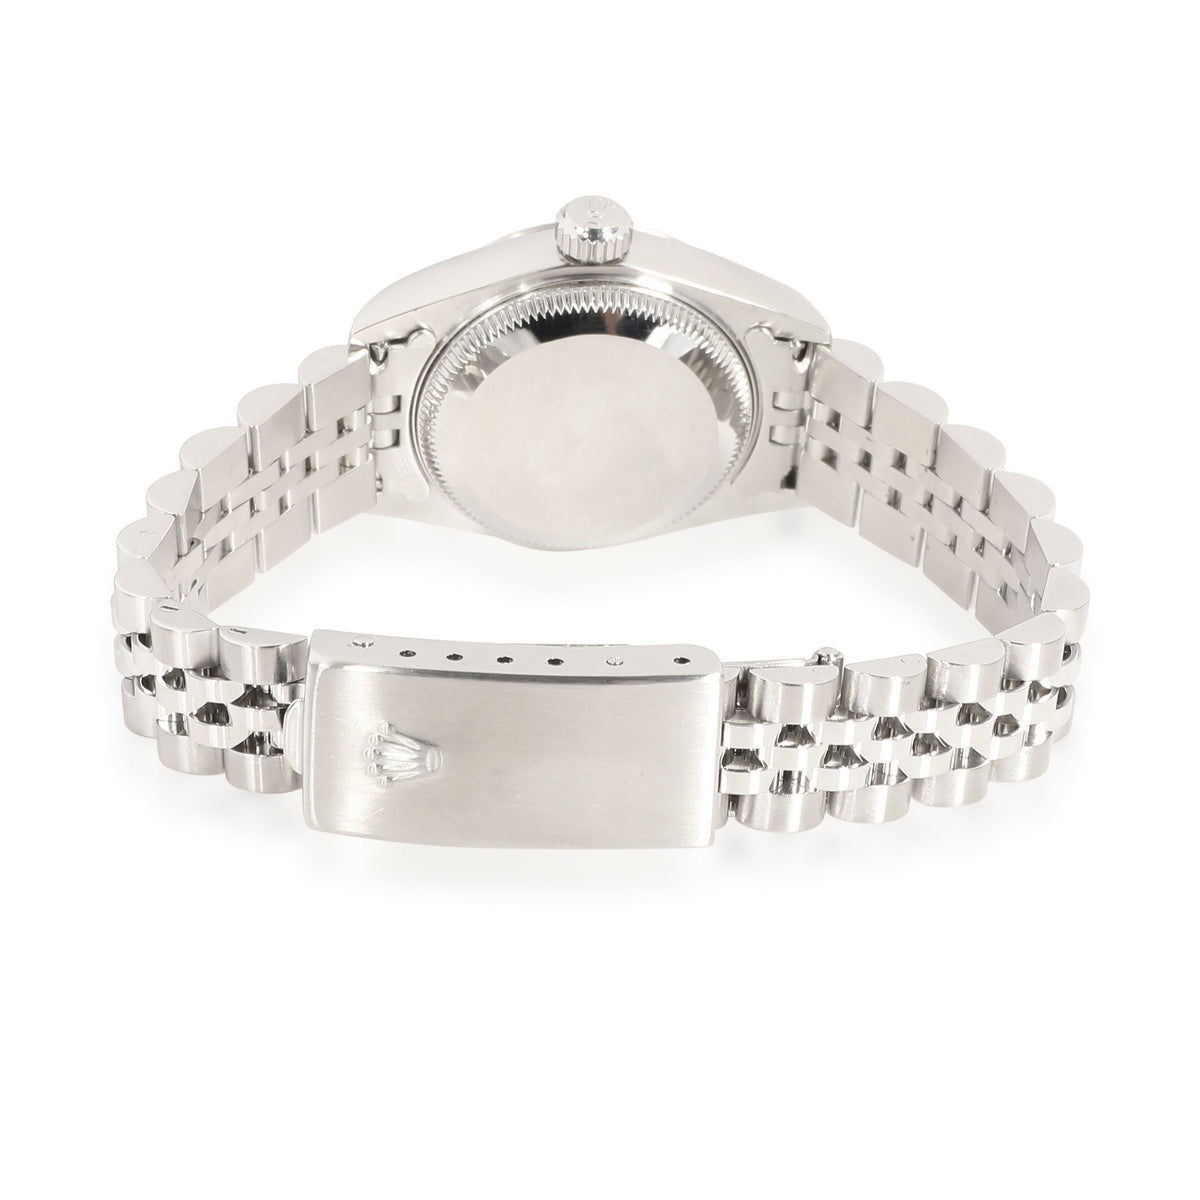 Rolex Datejust 79174 Women's Watch in 18kt Stainless Steel/White Gold